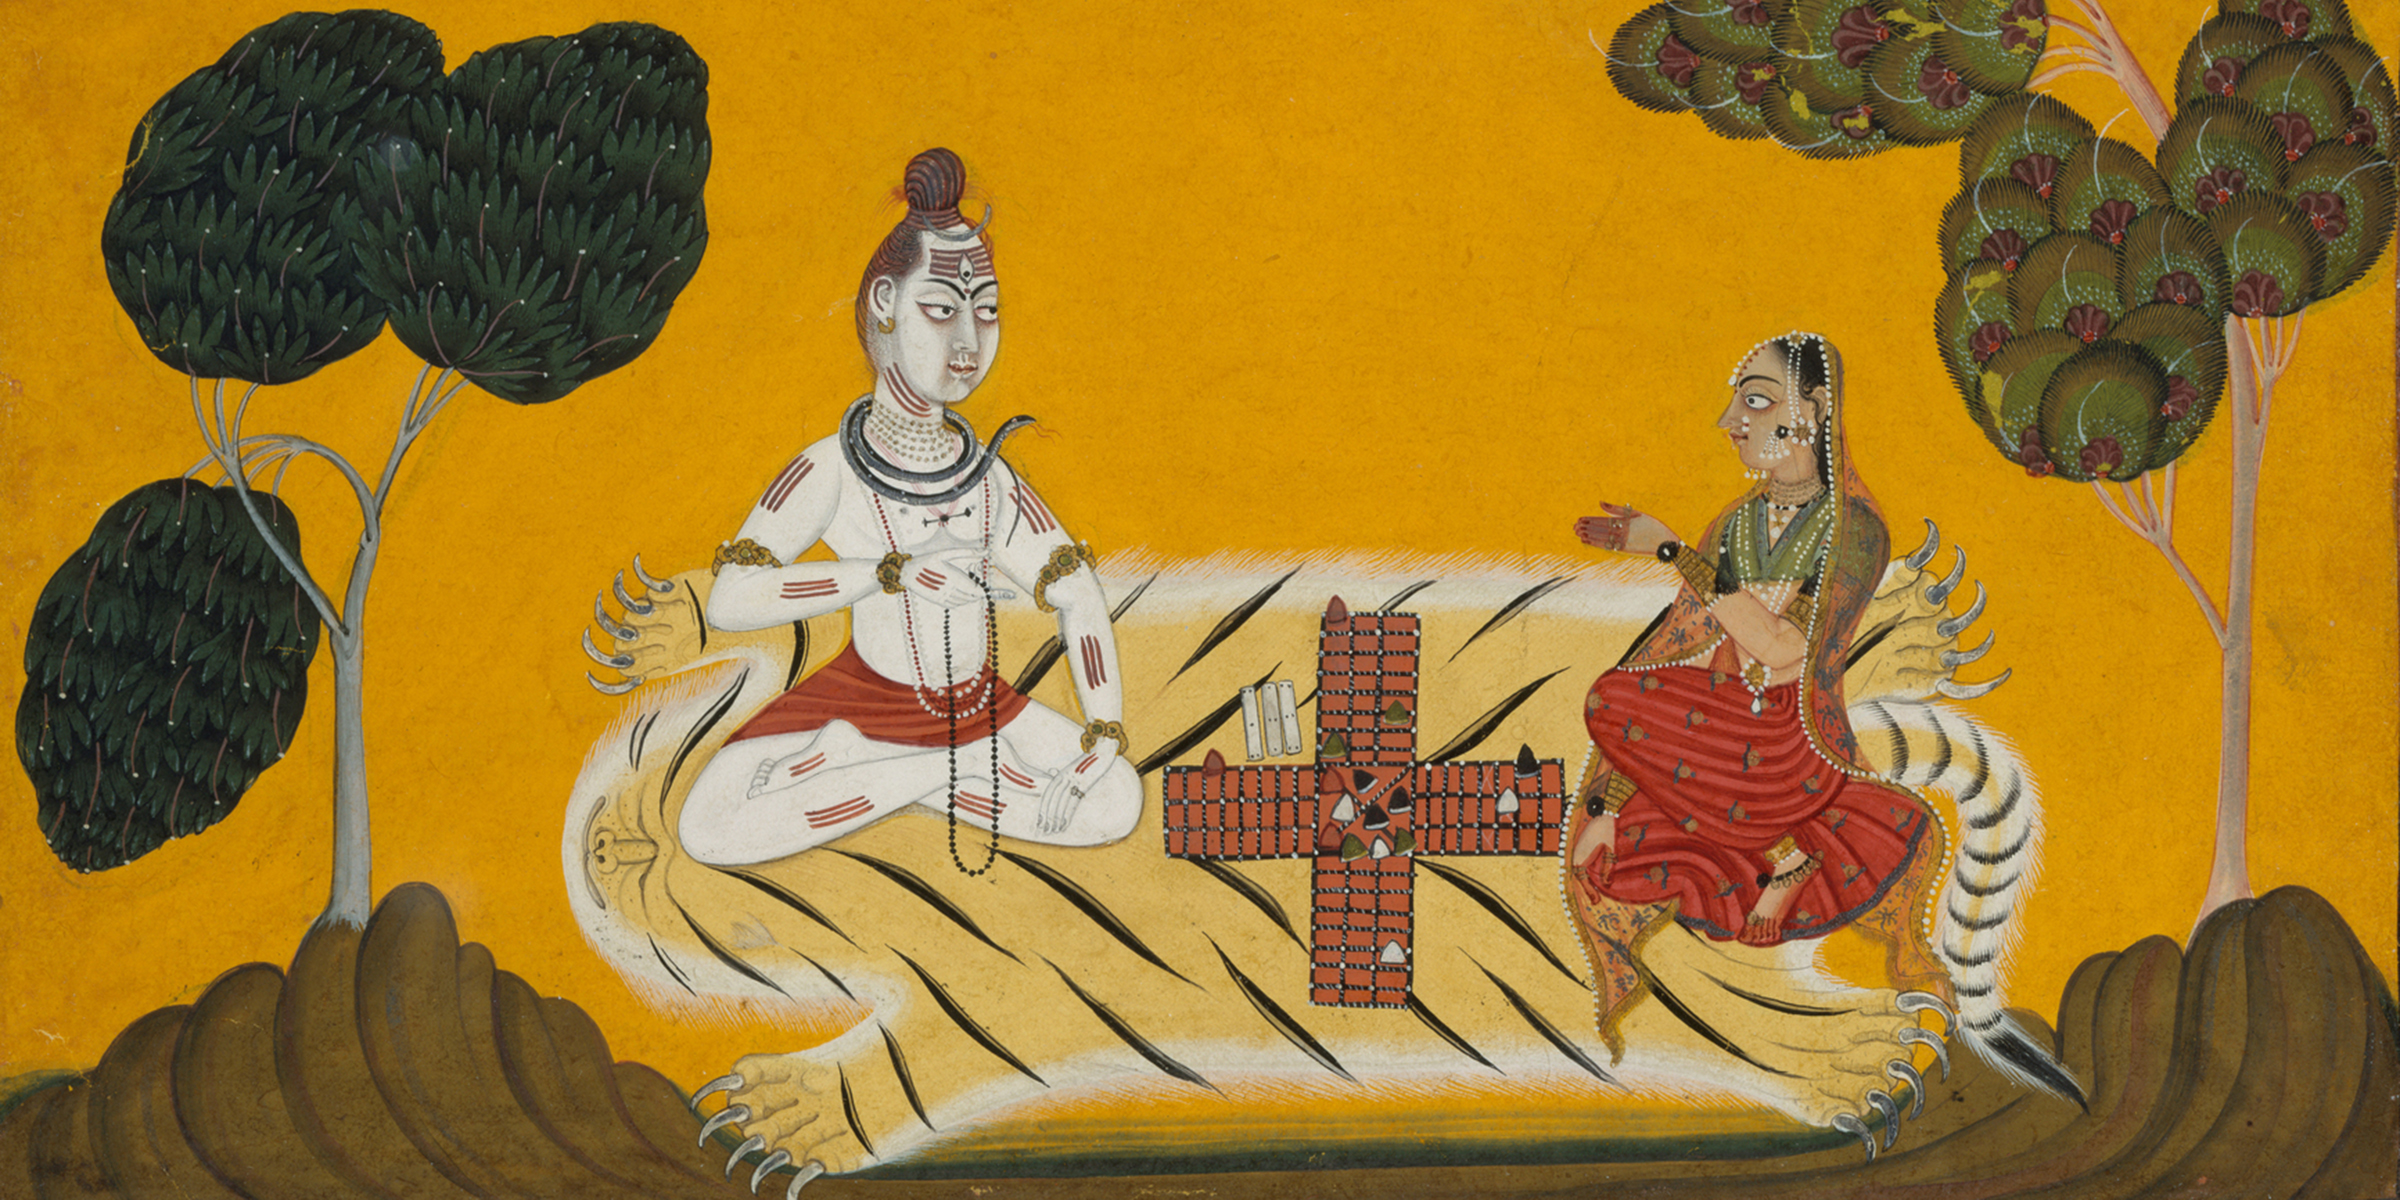 Shiva and Parvati Playing Chaupar, by Devidasa of Nurpur, c. 1695.